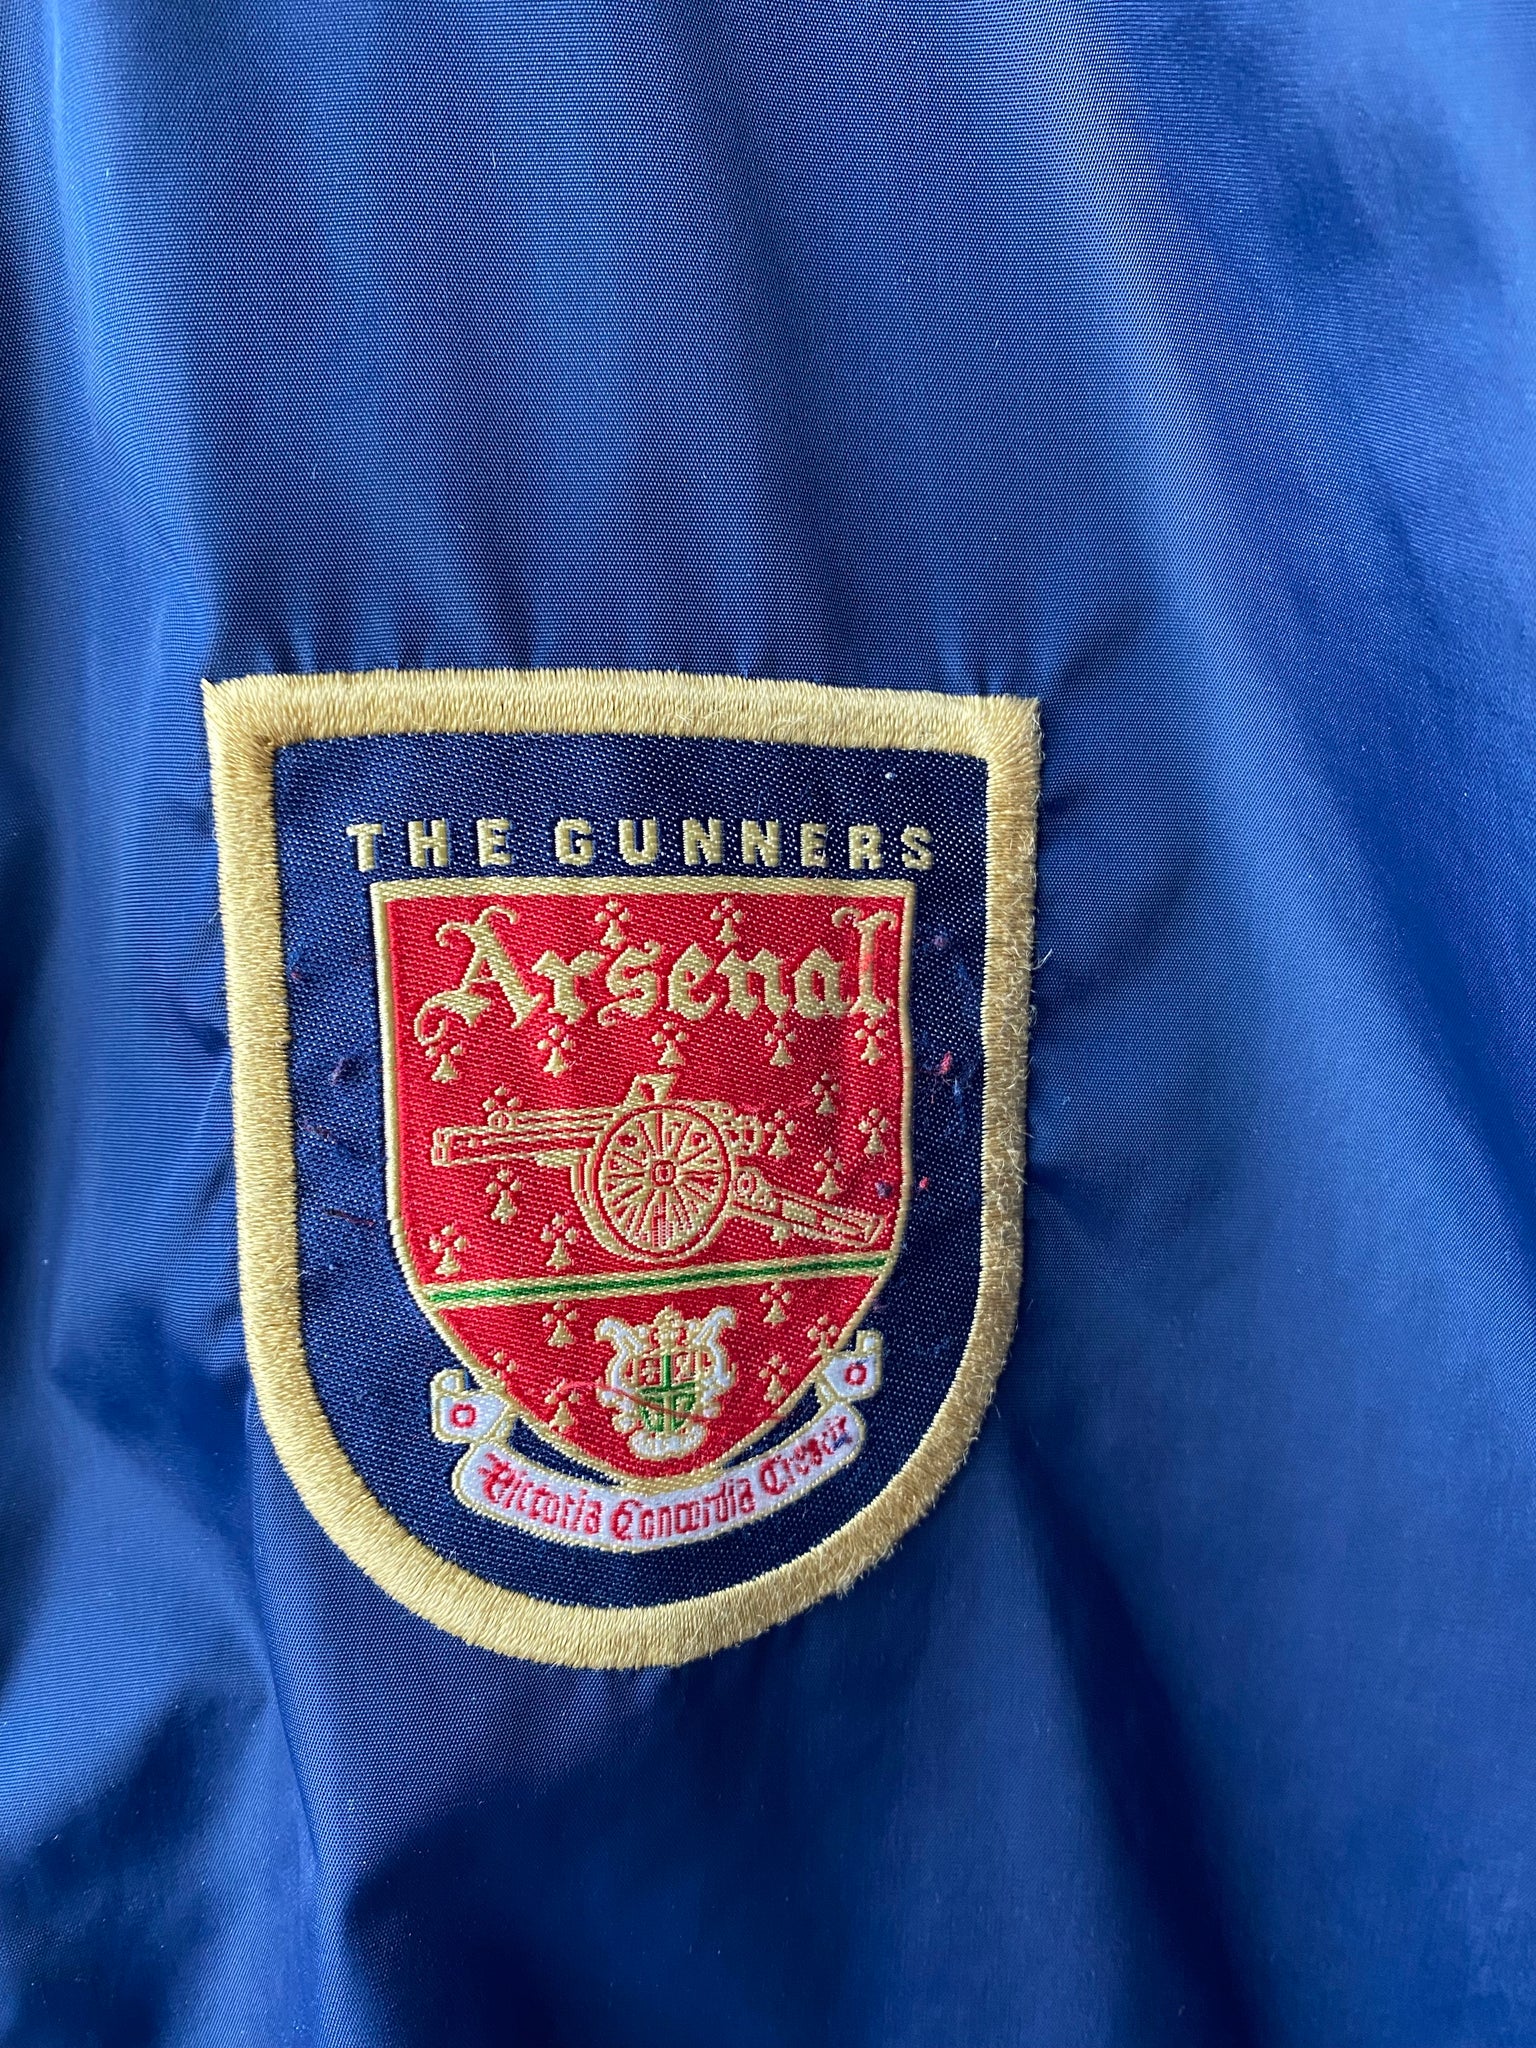 Mens vintage 90s Nike x Arsenal football training jacket - Medium to 2XL